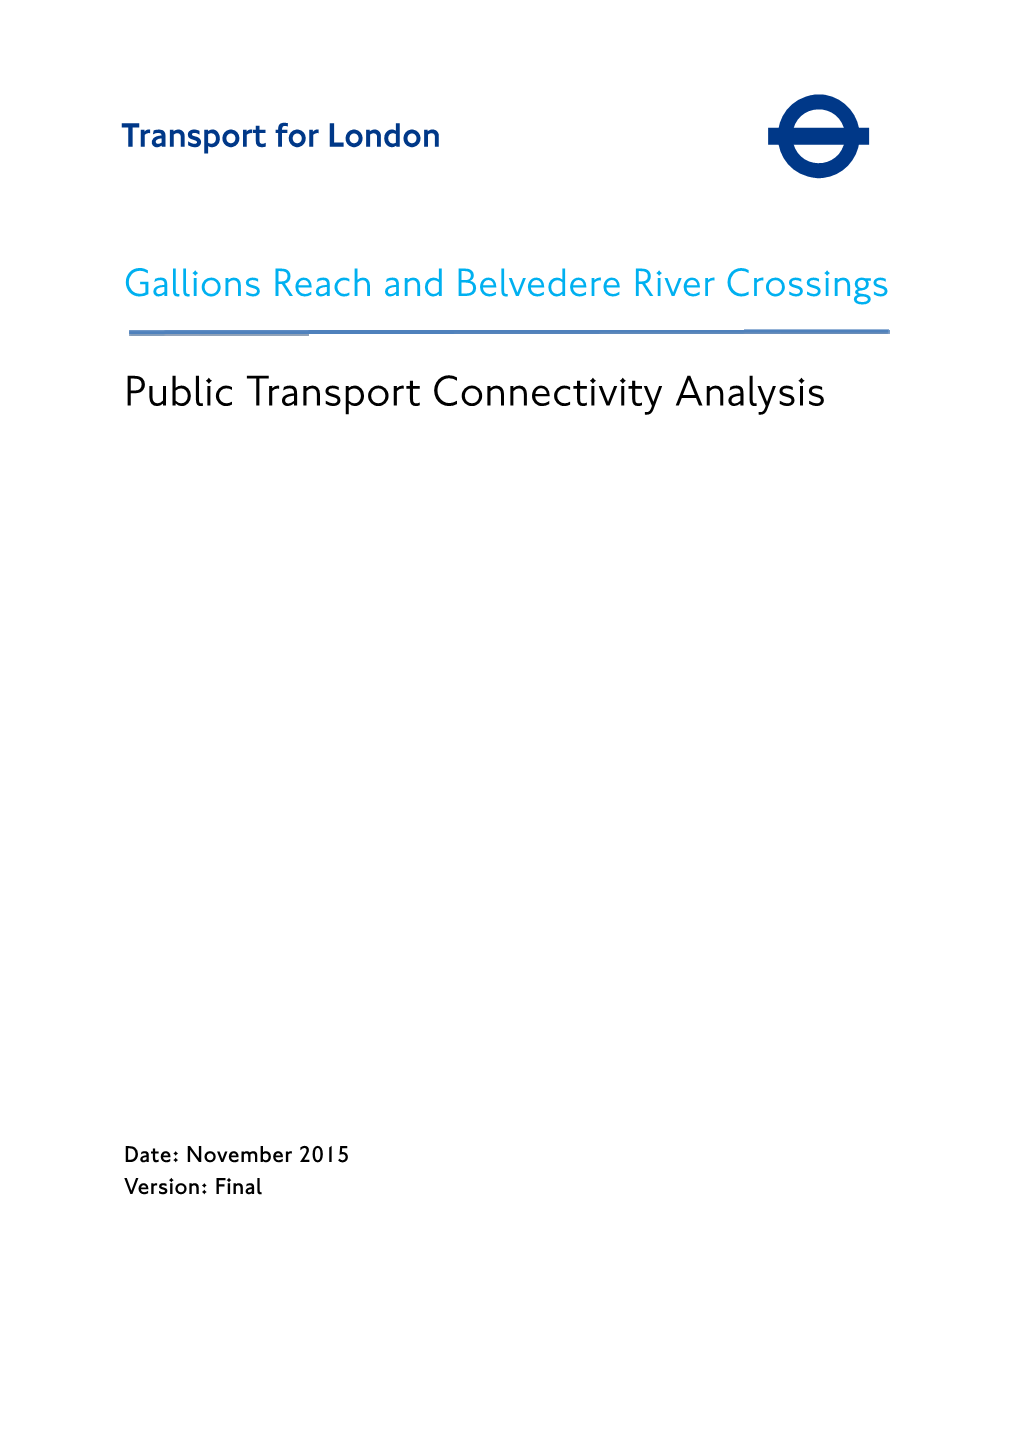 Public Transport Connectivity Analysis